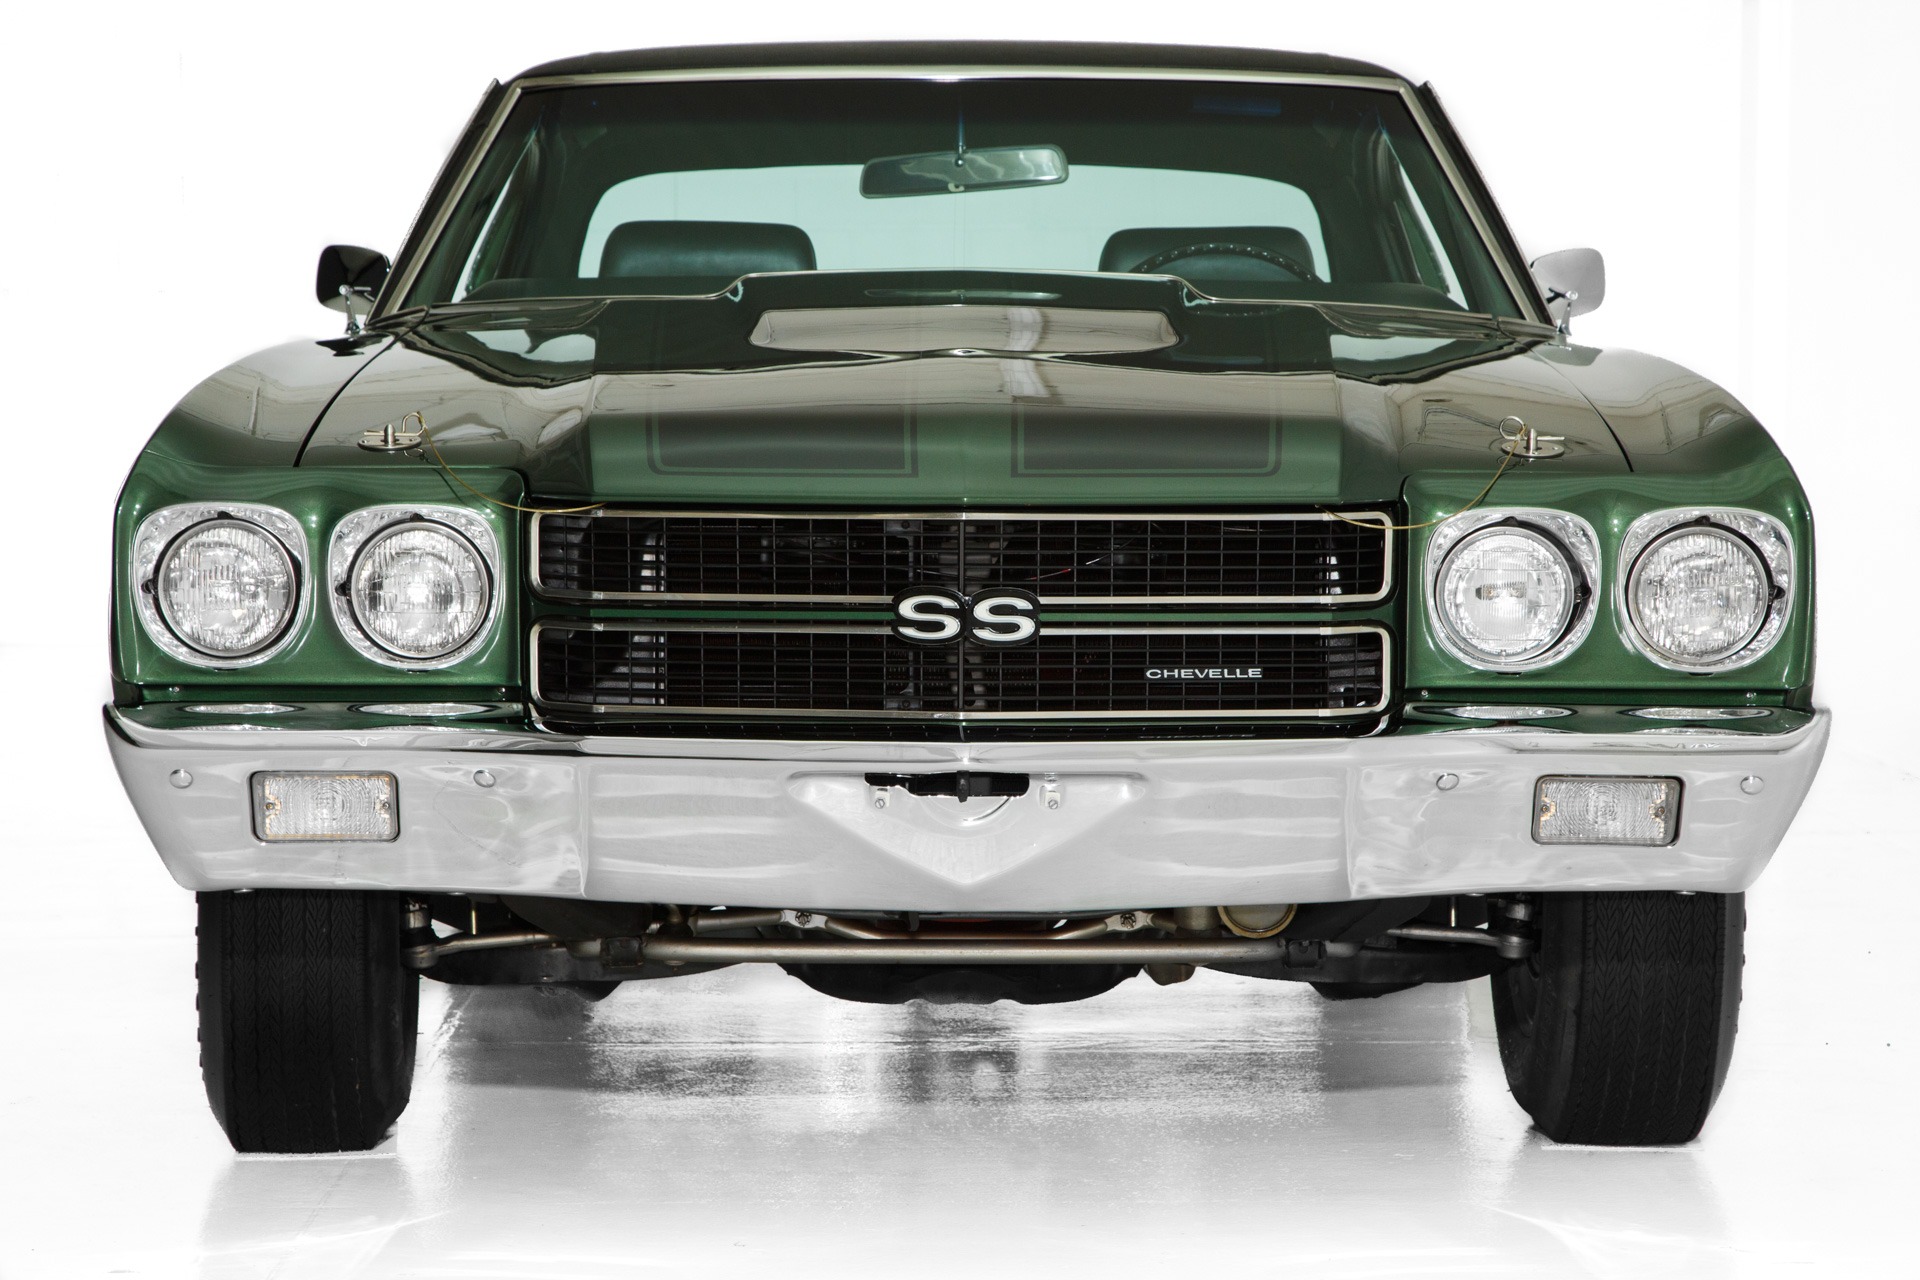 For Sale Used 1970 Chevrolet Chevelle SS, 396ci Auto PS PB | American Dream Machines Des Moines IA 50309